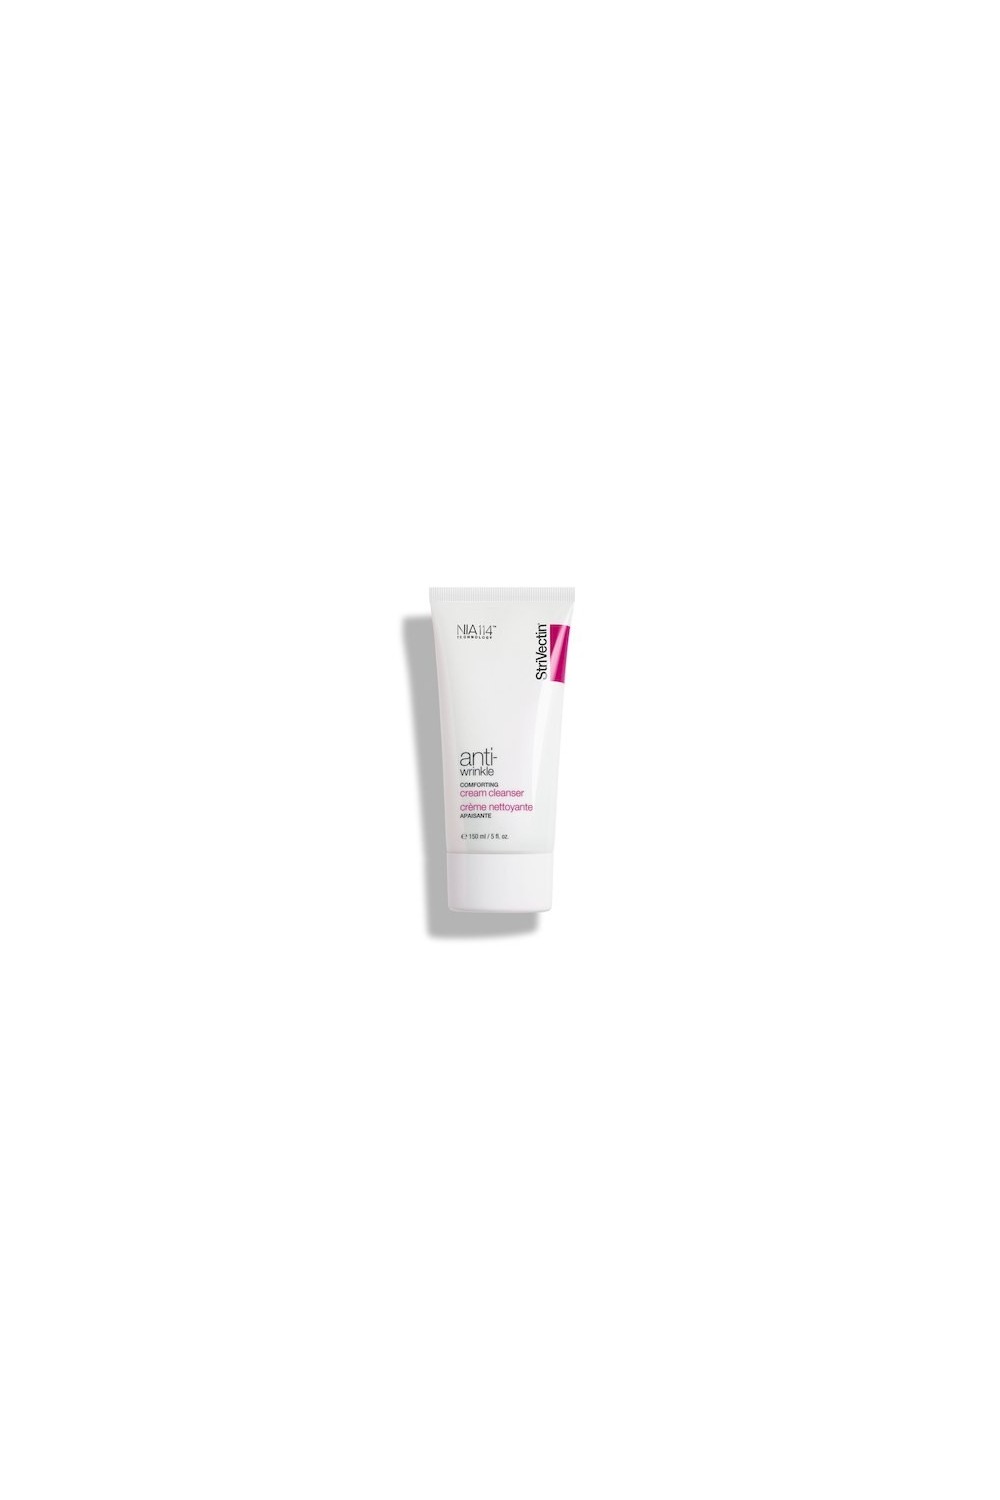 Strivectin Anti Wrinkle Cream Cleanser Comforting 150ml